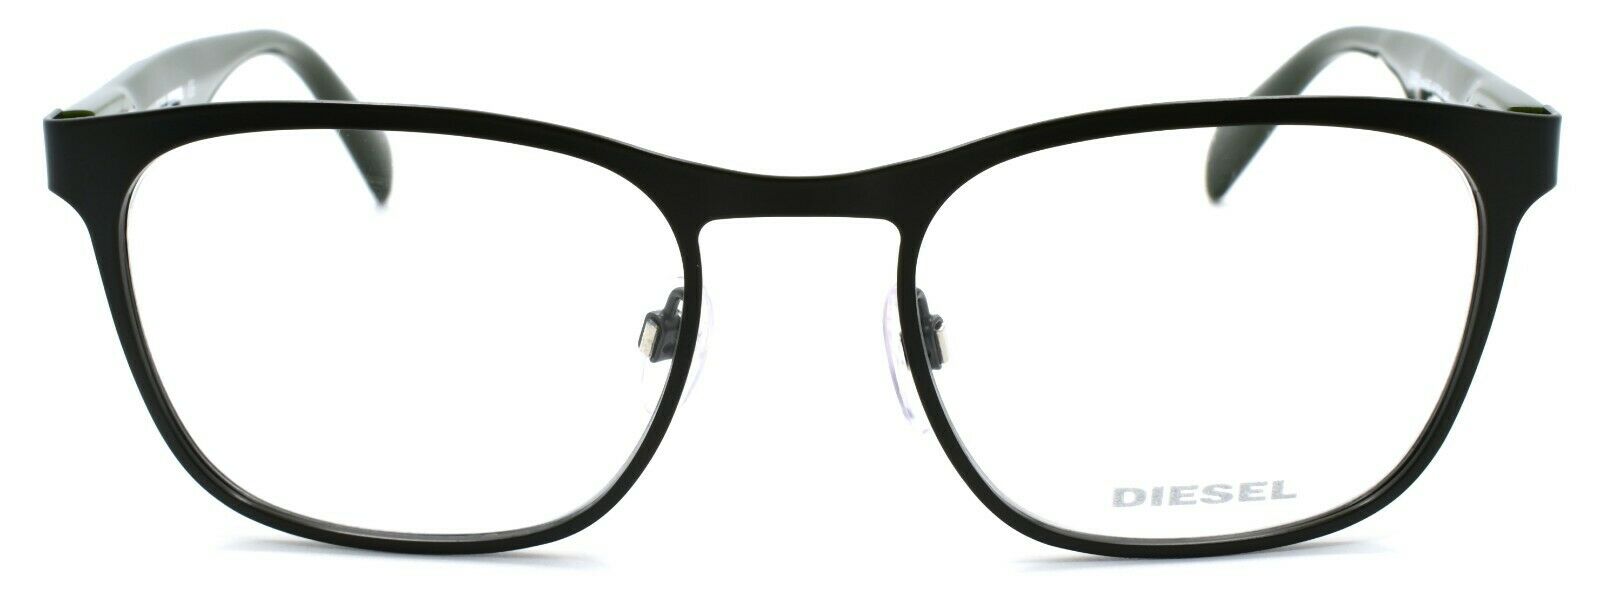 2-Diesel DL5209 097 Men's Eyeglasses Frames 51-19-140 Matte Dark Green-664689809004-IKSpecs